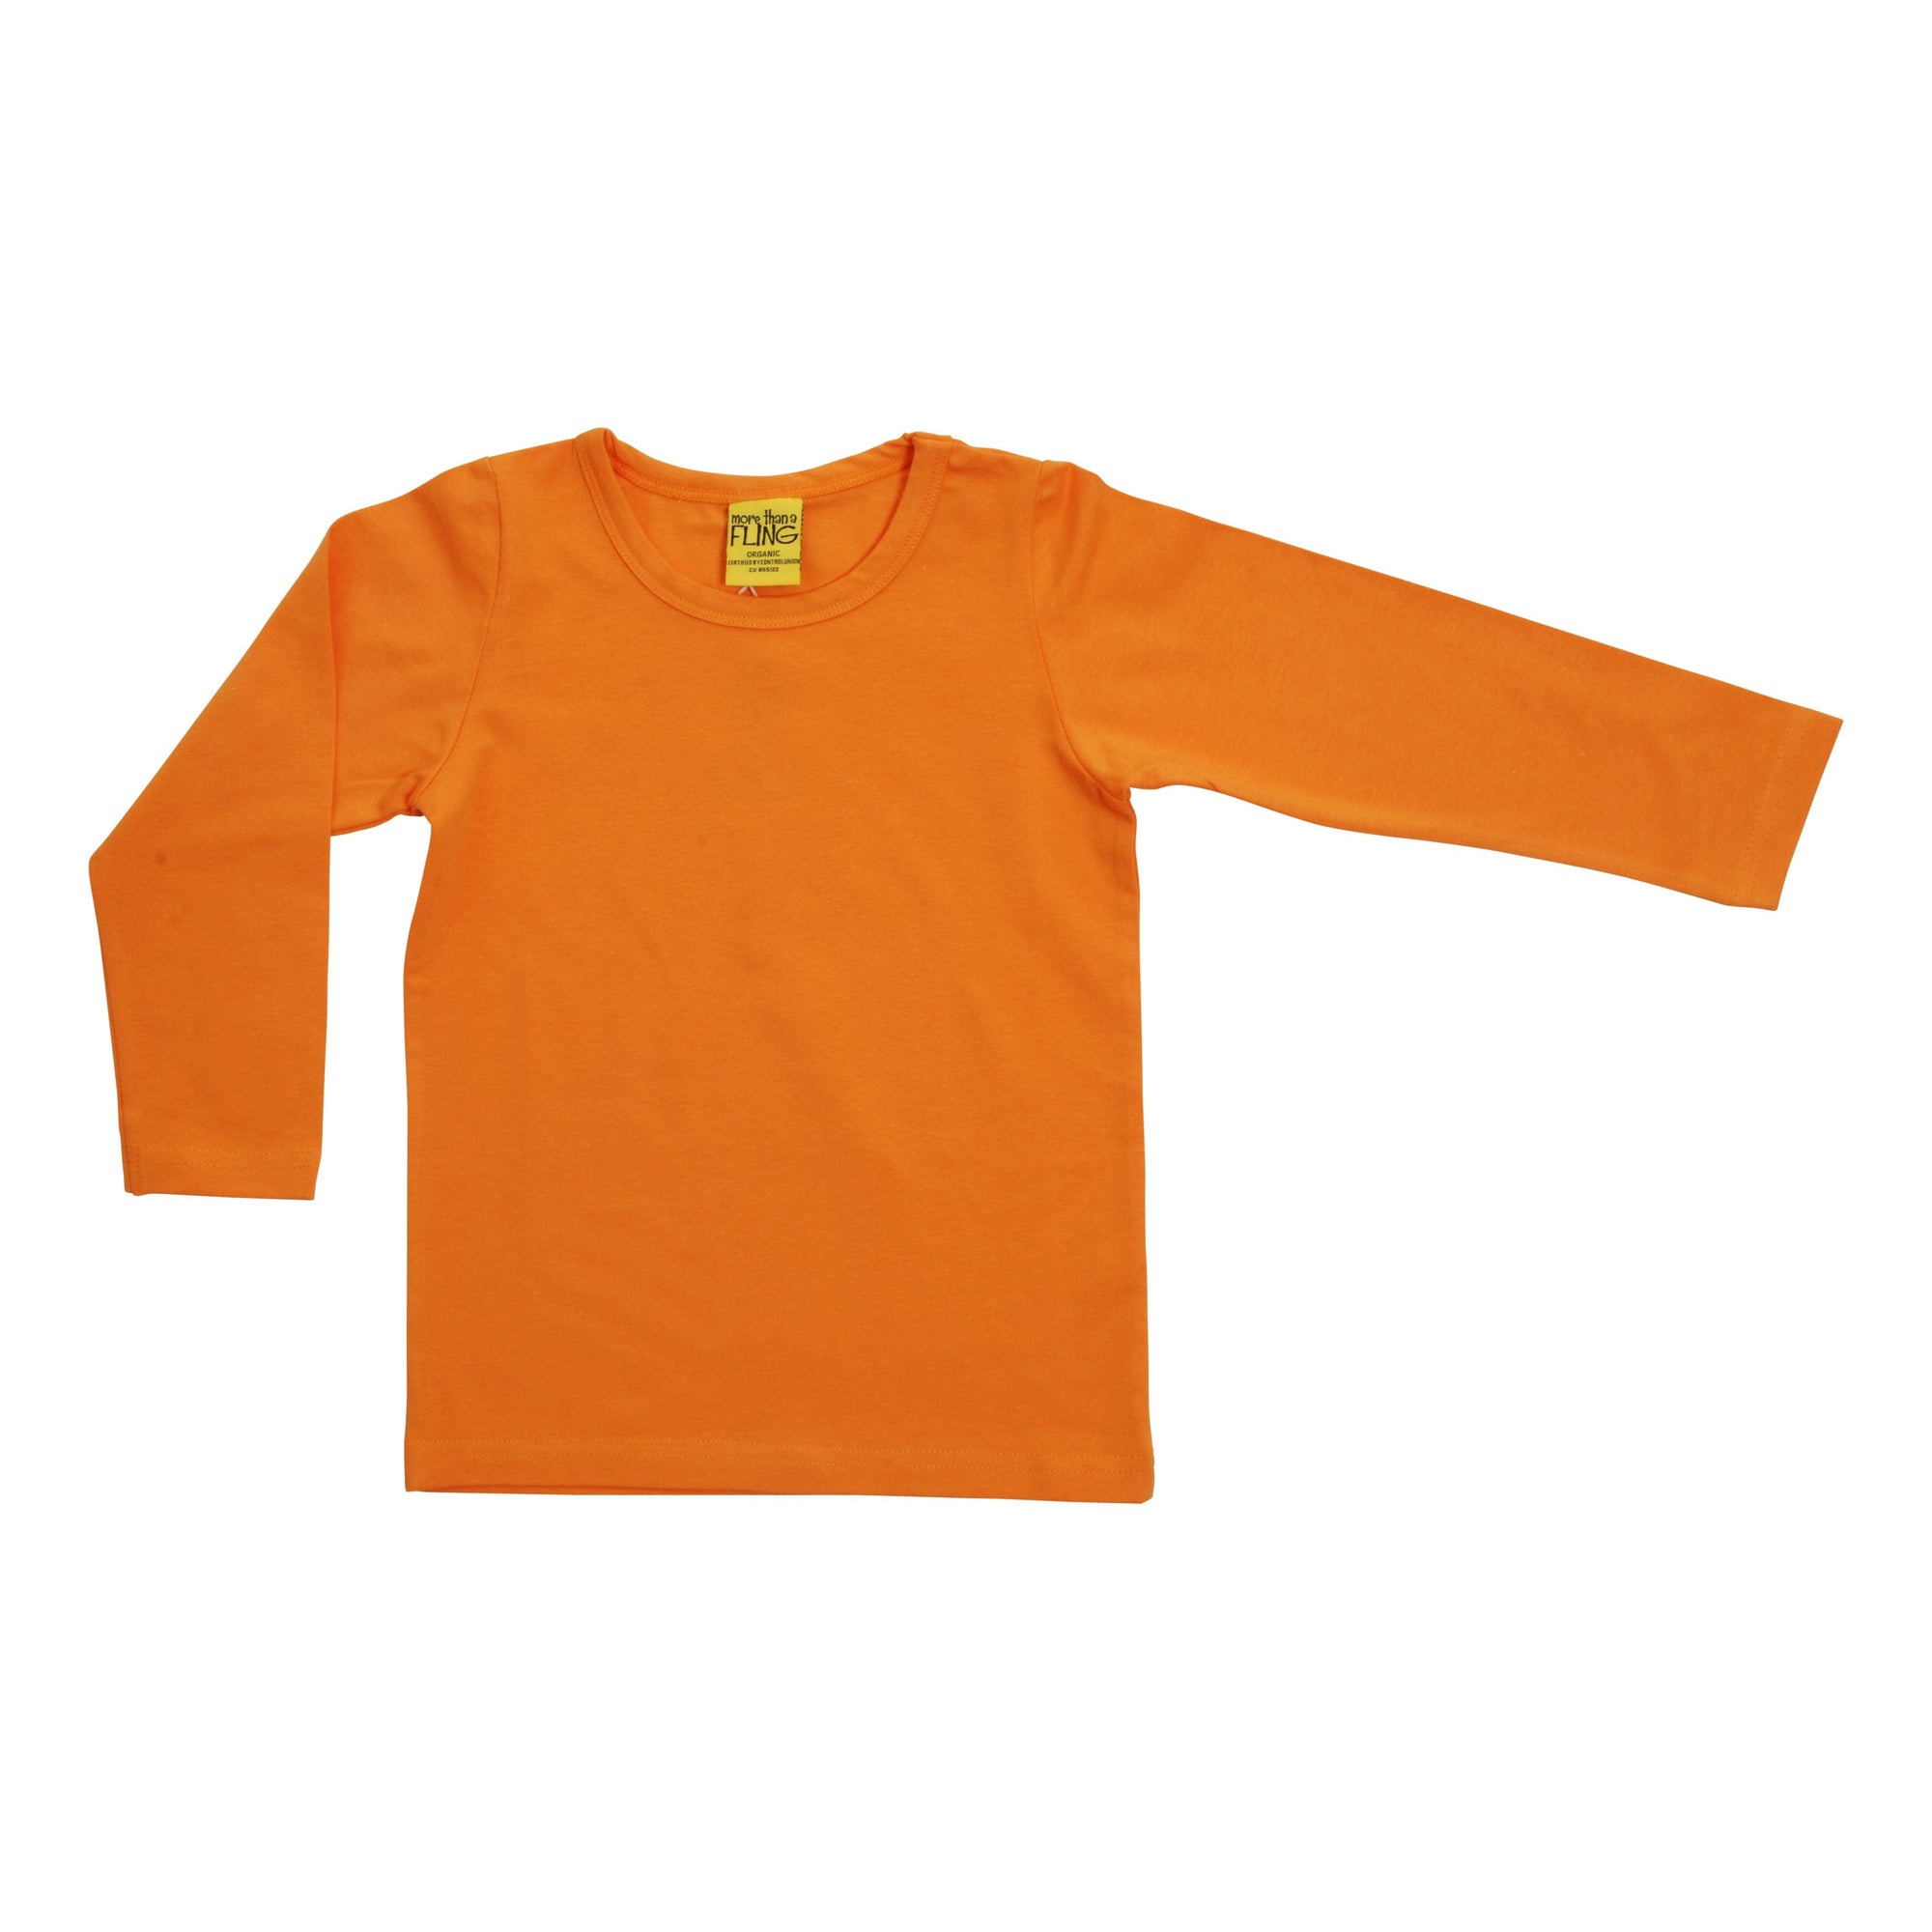 Olashirt on X: Fraggle Rock Group Hug Brand A Transparen T-Shirt Hoodie,  Sweatshirt, V-Neck, Tank Top, Long Sleeve Tee Shirt, Kids T-Shirt, Mug,  etc. >>> Click here to buy:    /